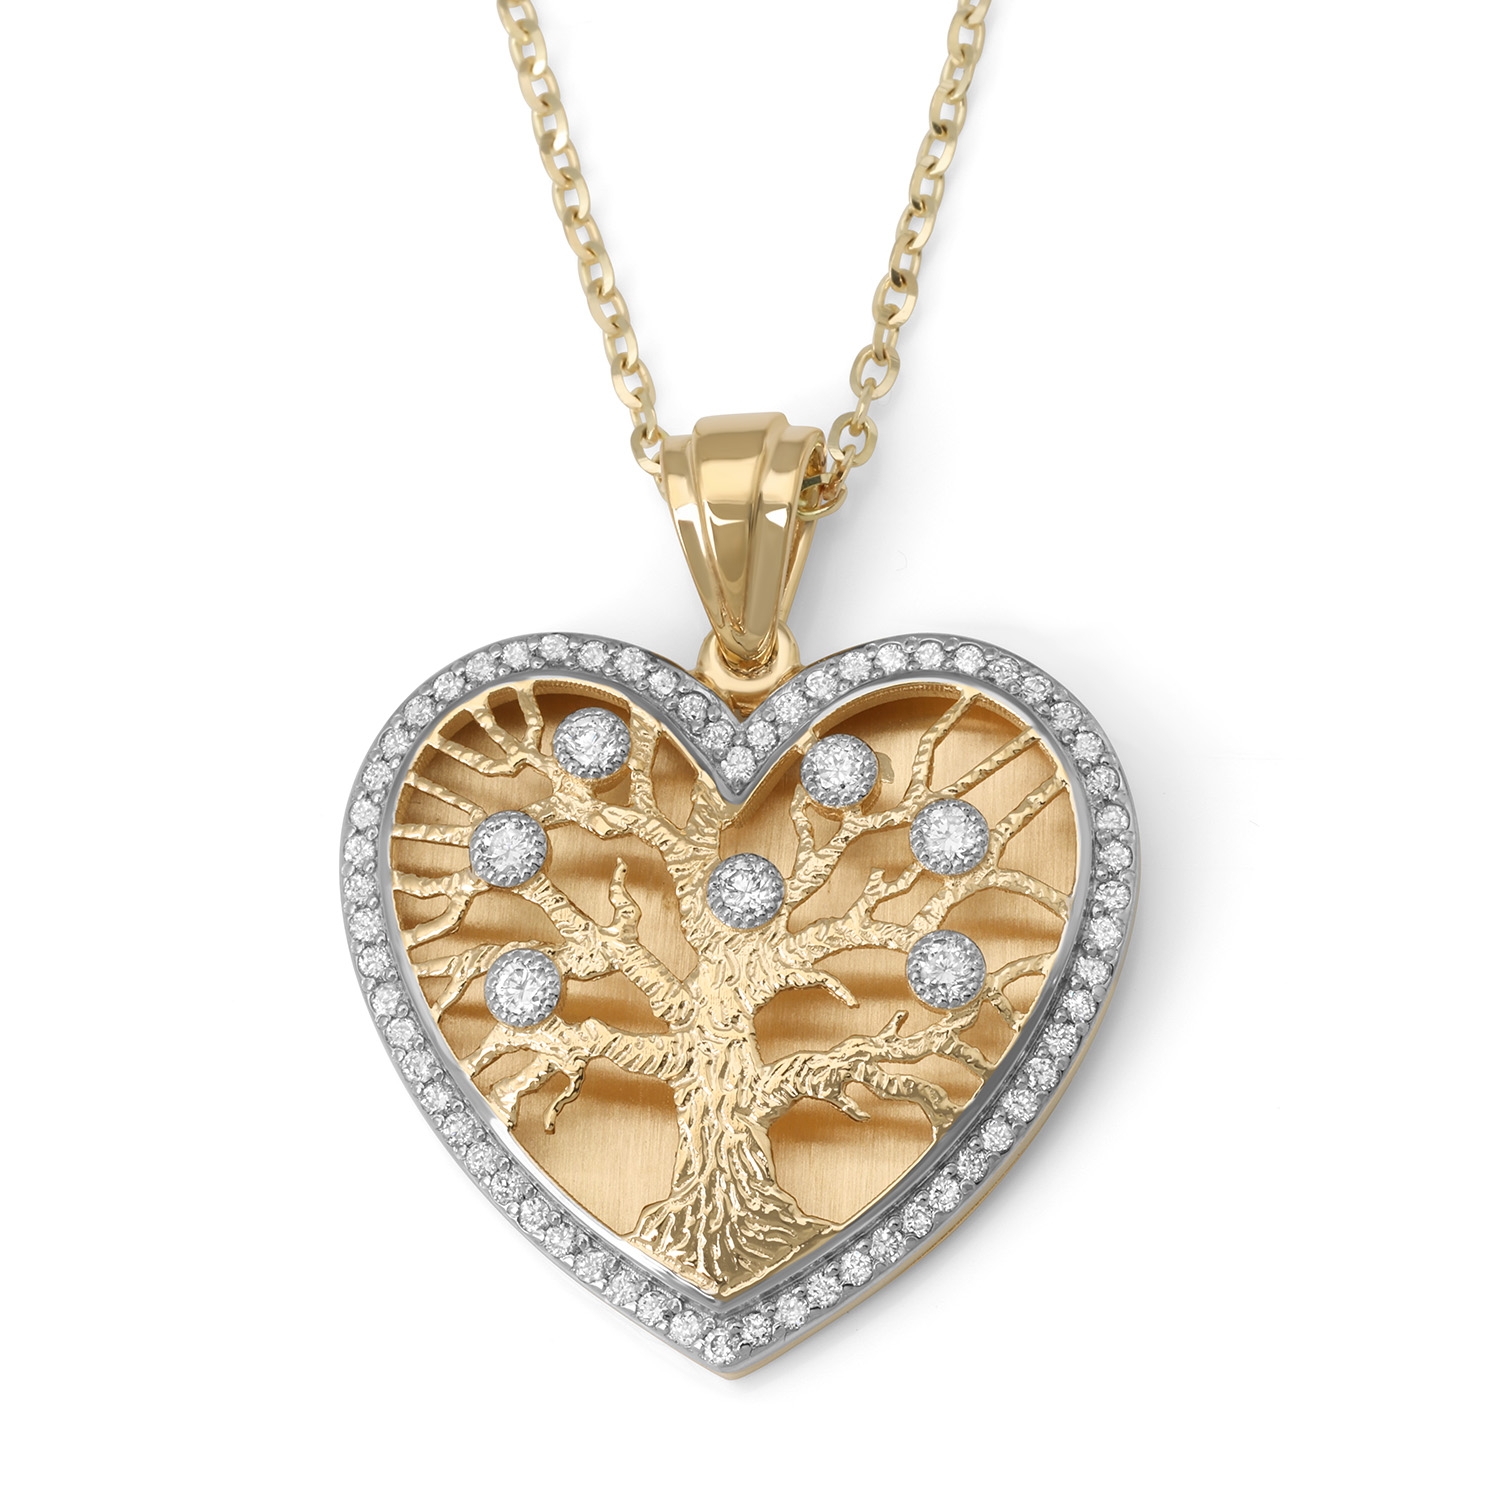 Anbinder Jewelry 14K Gold Large Heart-Shaped Tree of Life Pendant - 1